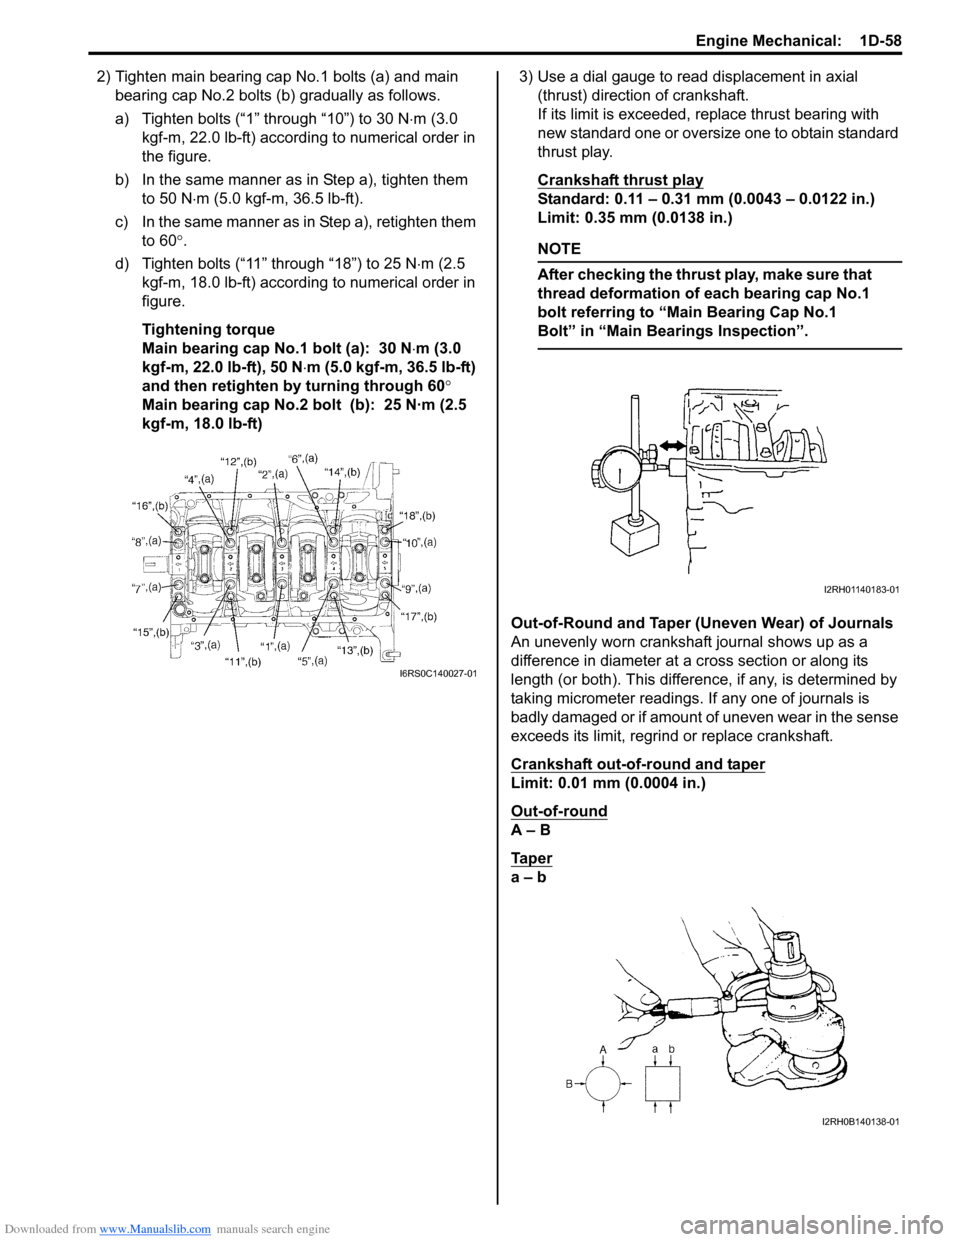 SUZUKI SWIFT 2007 2.G Service Service Manual Downloaded from www.Manualslib.com manuals search engine Engine Mechanical:  1D-58
2) Tighten main bearing cap No.1 bolts (a) and main bearing cap No.2 bolts (b ) gradually as follows.
a) Tighten bolt